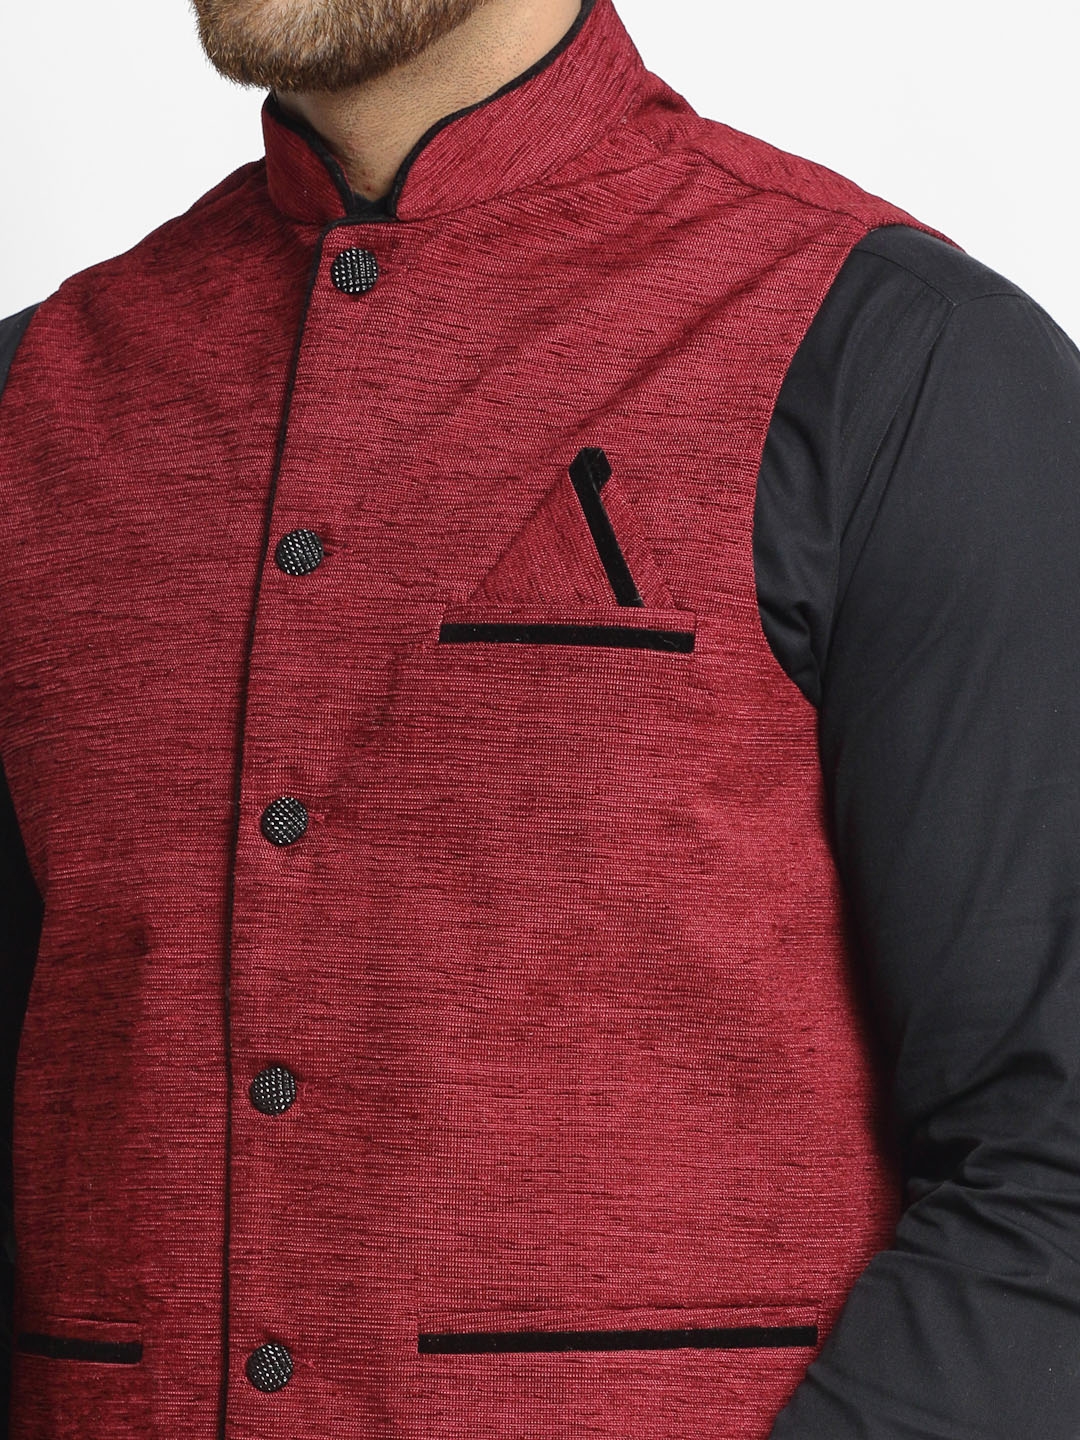 Jompers | Jompers Men's Solid Nehru Jacket with Square Pocket 3